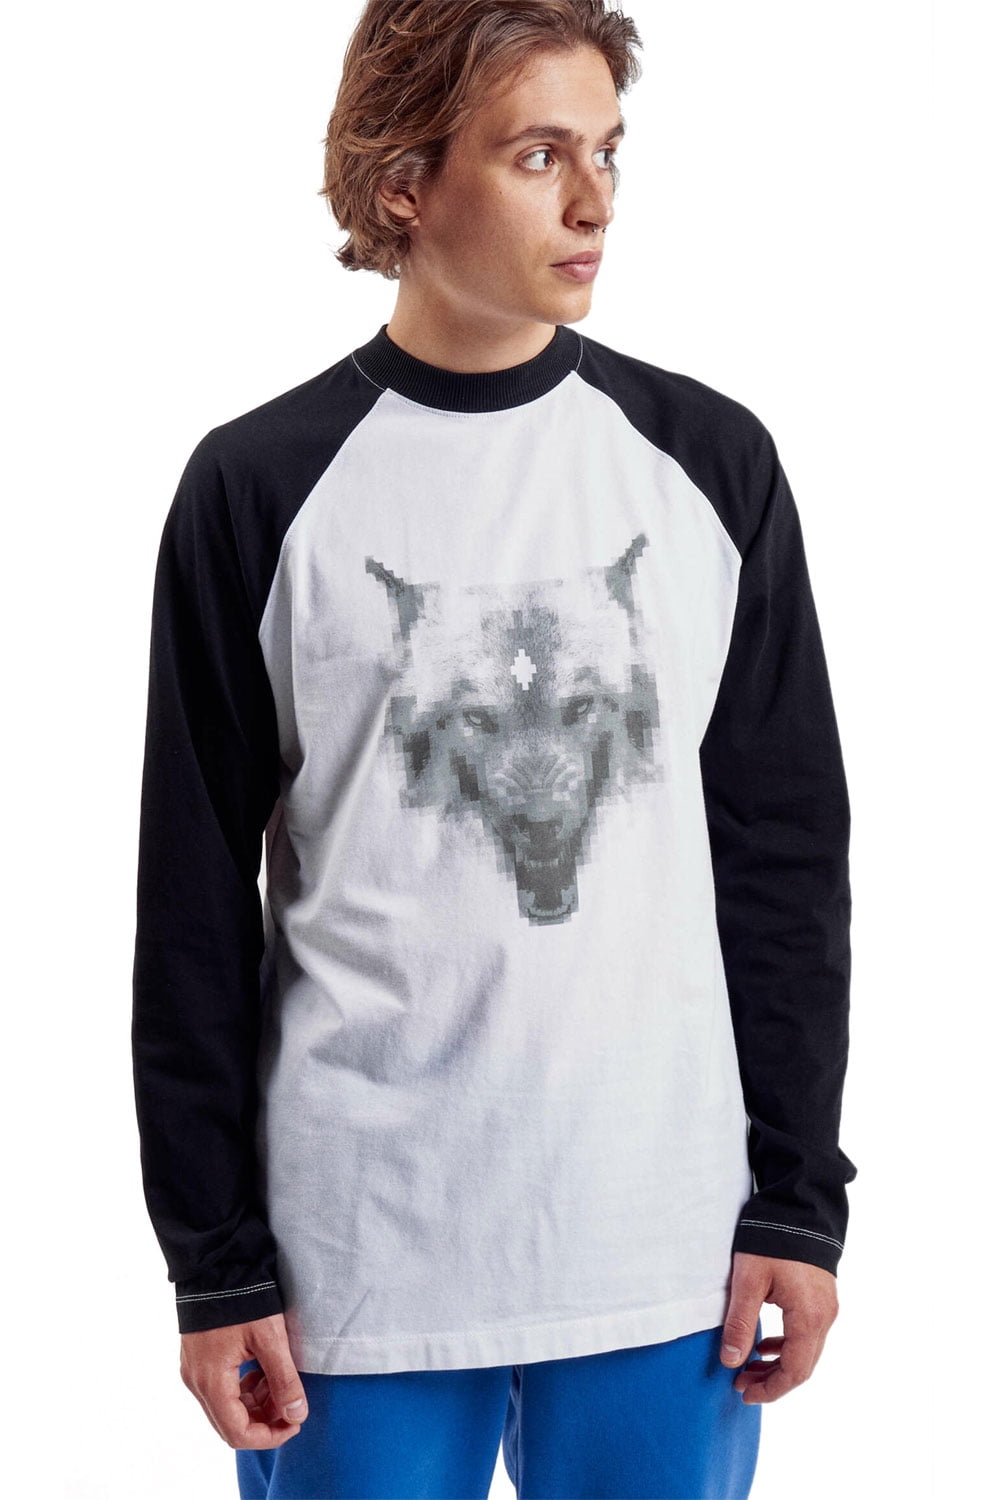 Marcelo Mens Cross Wolf Long Sleeve T-Shirt Grey - NWT $300 Walmart.com